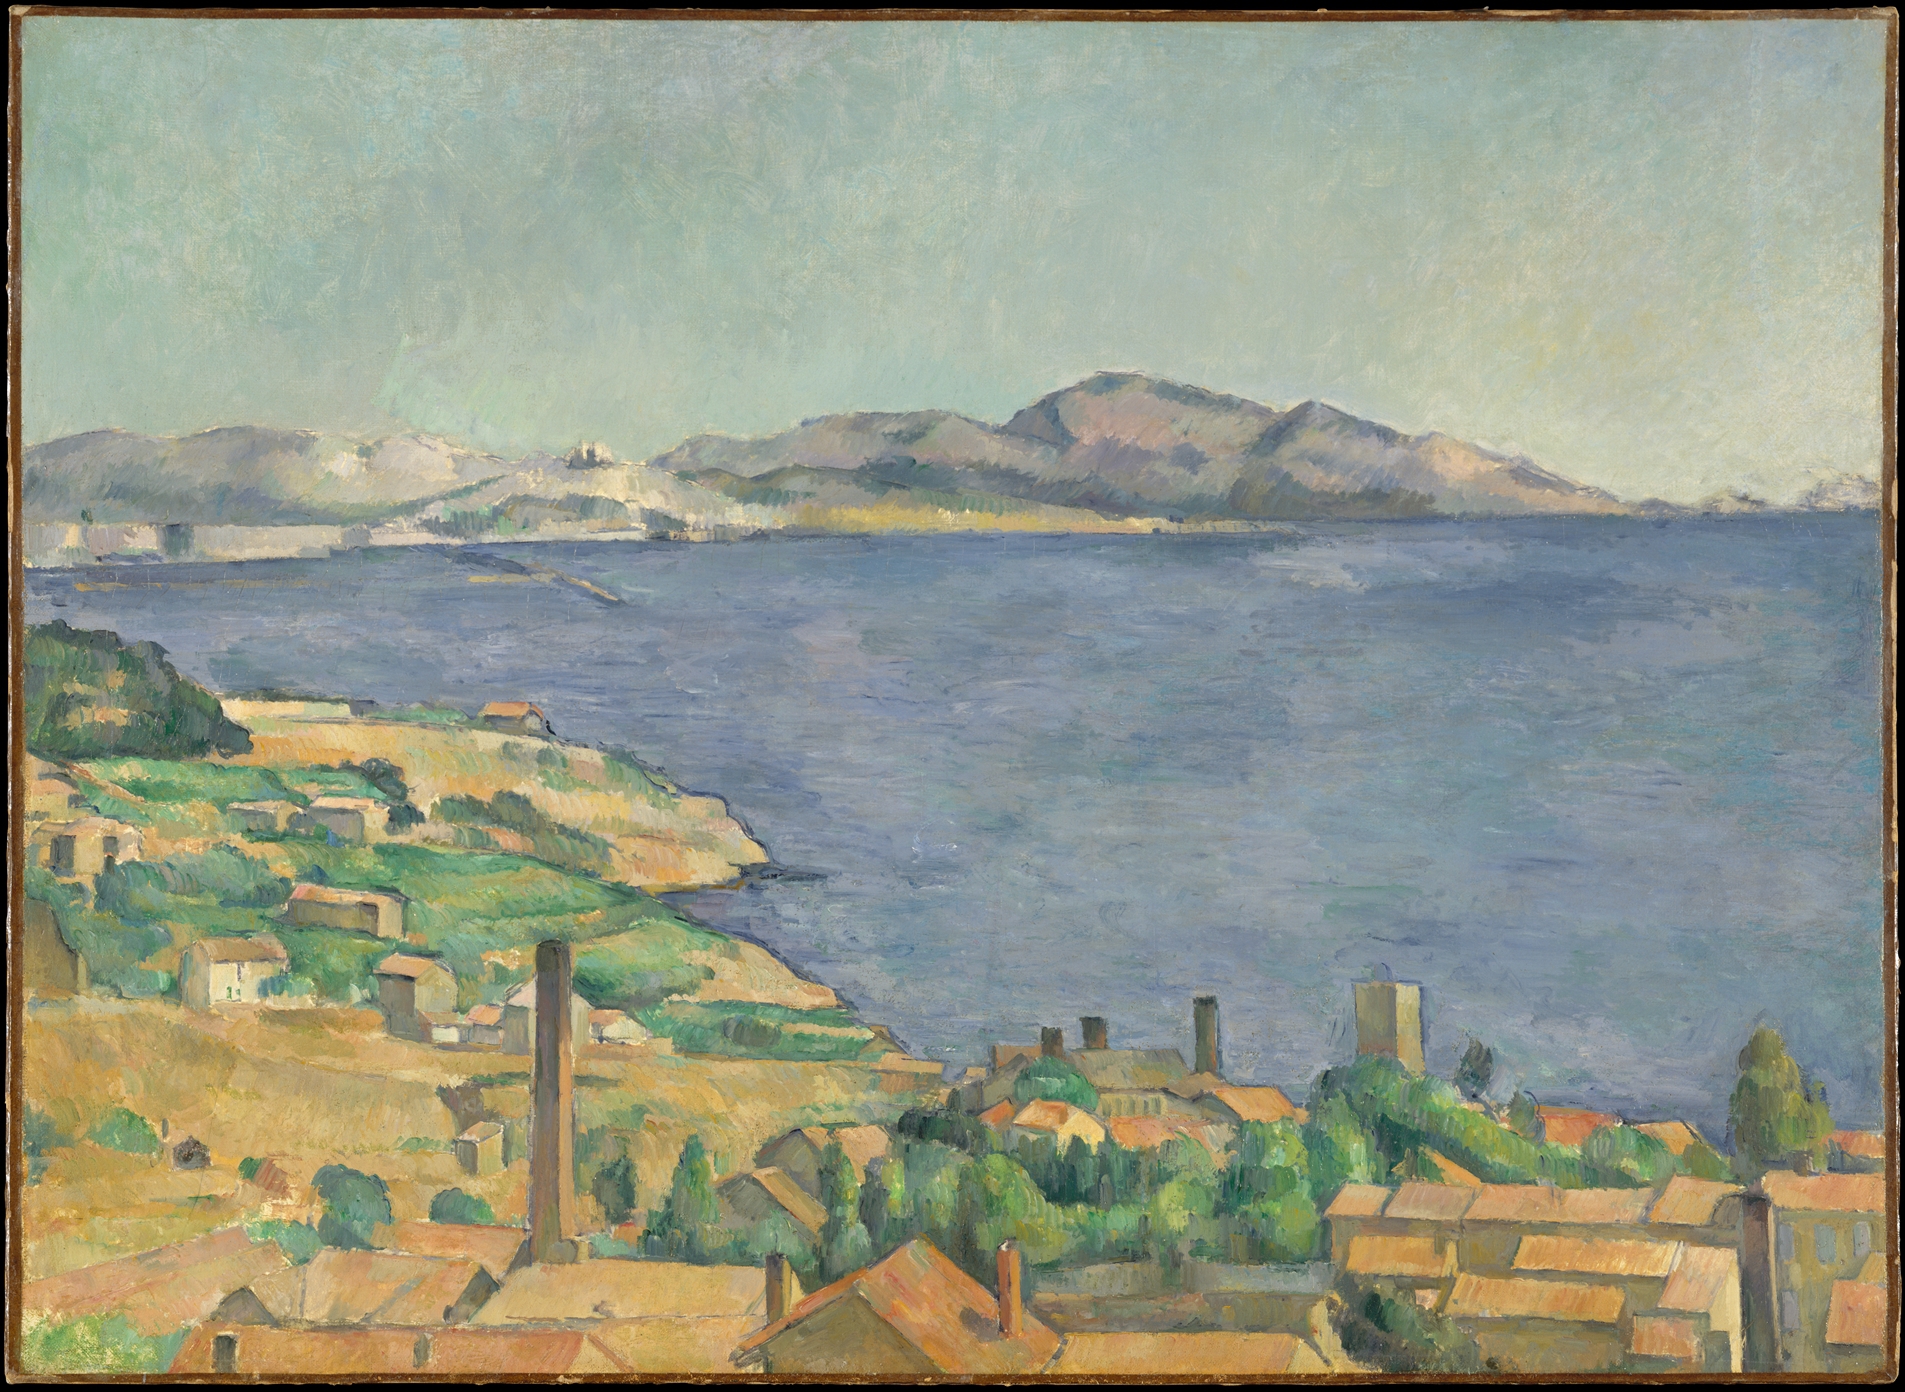 The Gulf of Marseilles Seen from L'Estaque by Paul Cézanne - c. 1885 - 73 x 100.3 cm Metropolitan Museum of Art